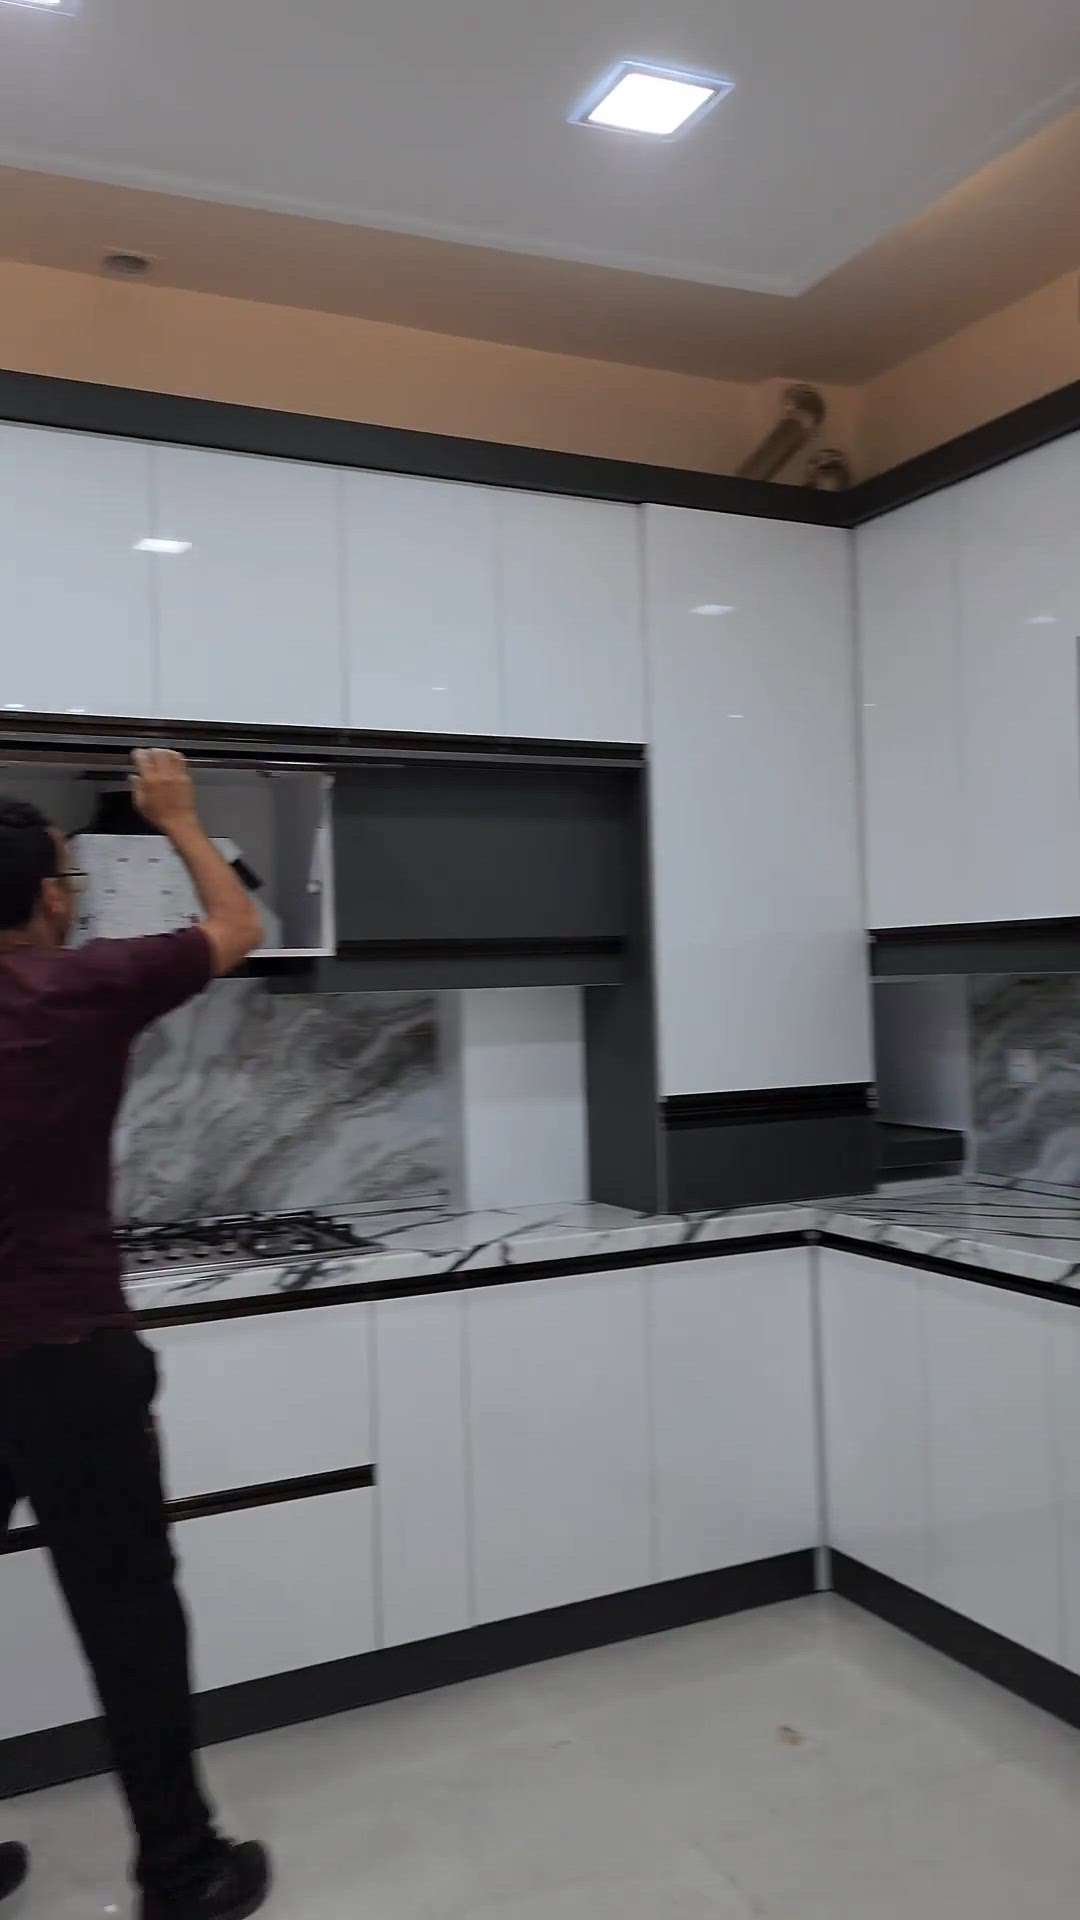 modular furniture modellor kitchen video new  #ask  #koloapp  #Rk  #ModularKitchen  #Modularfurniture  #ask